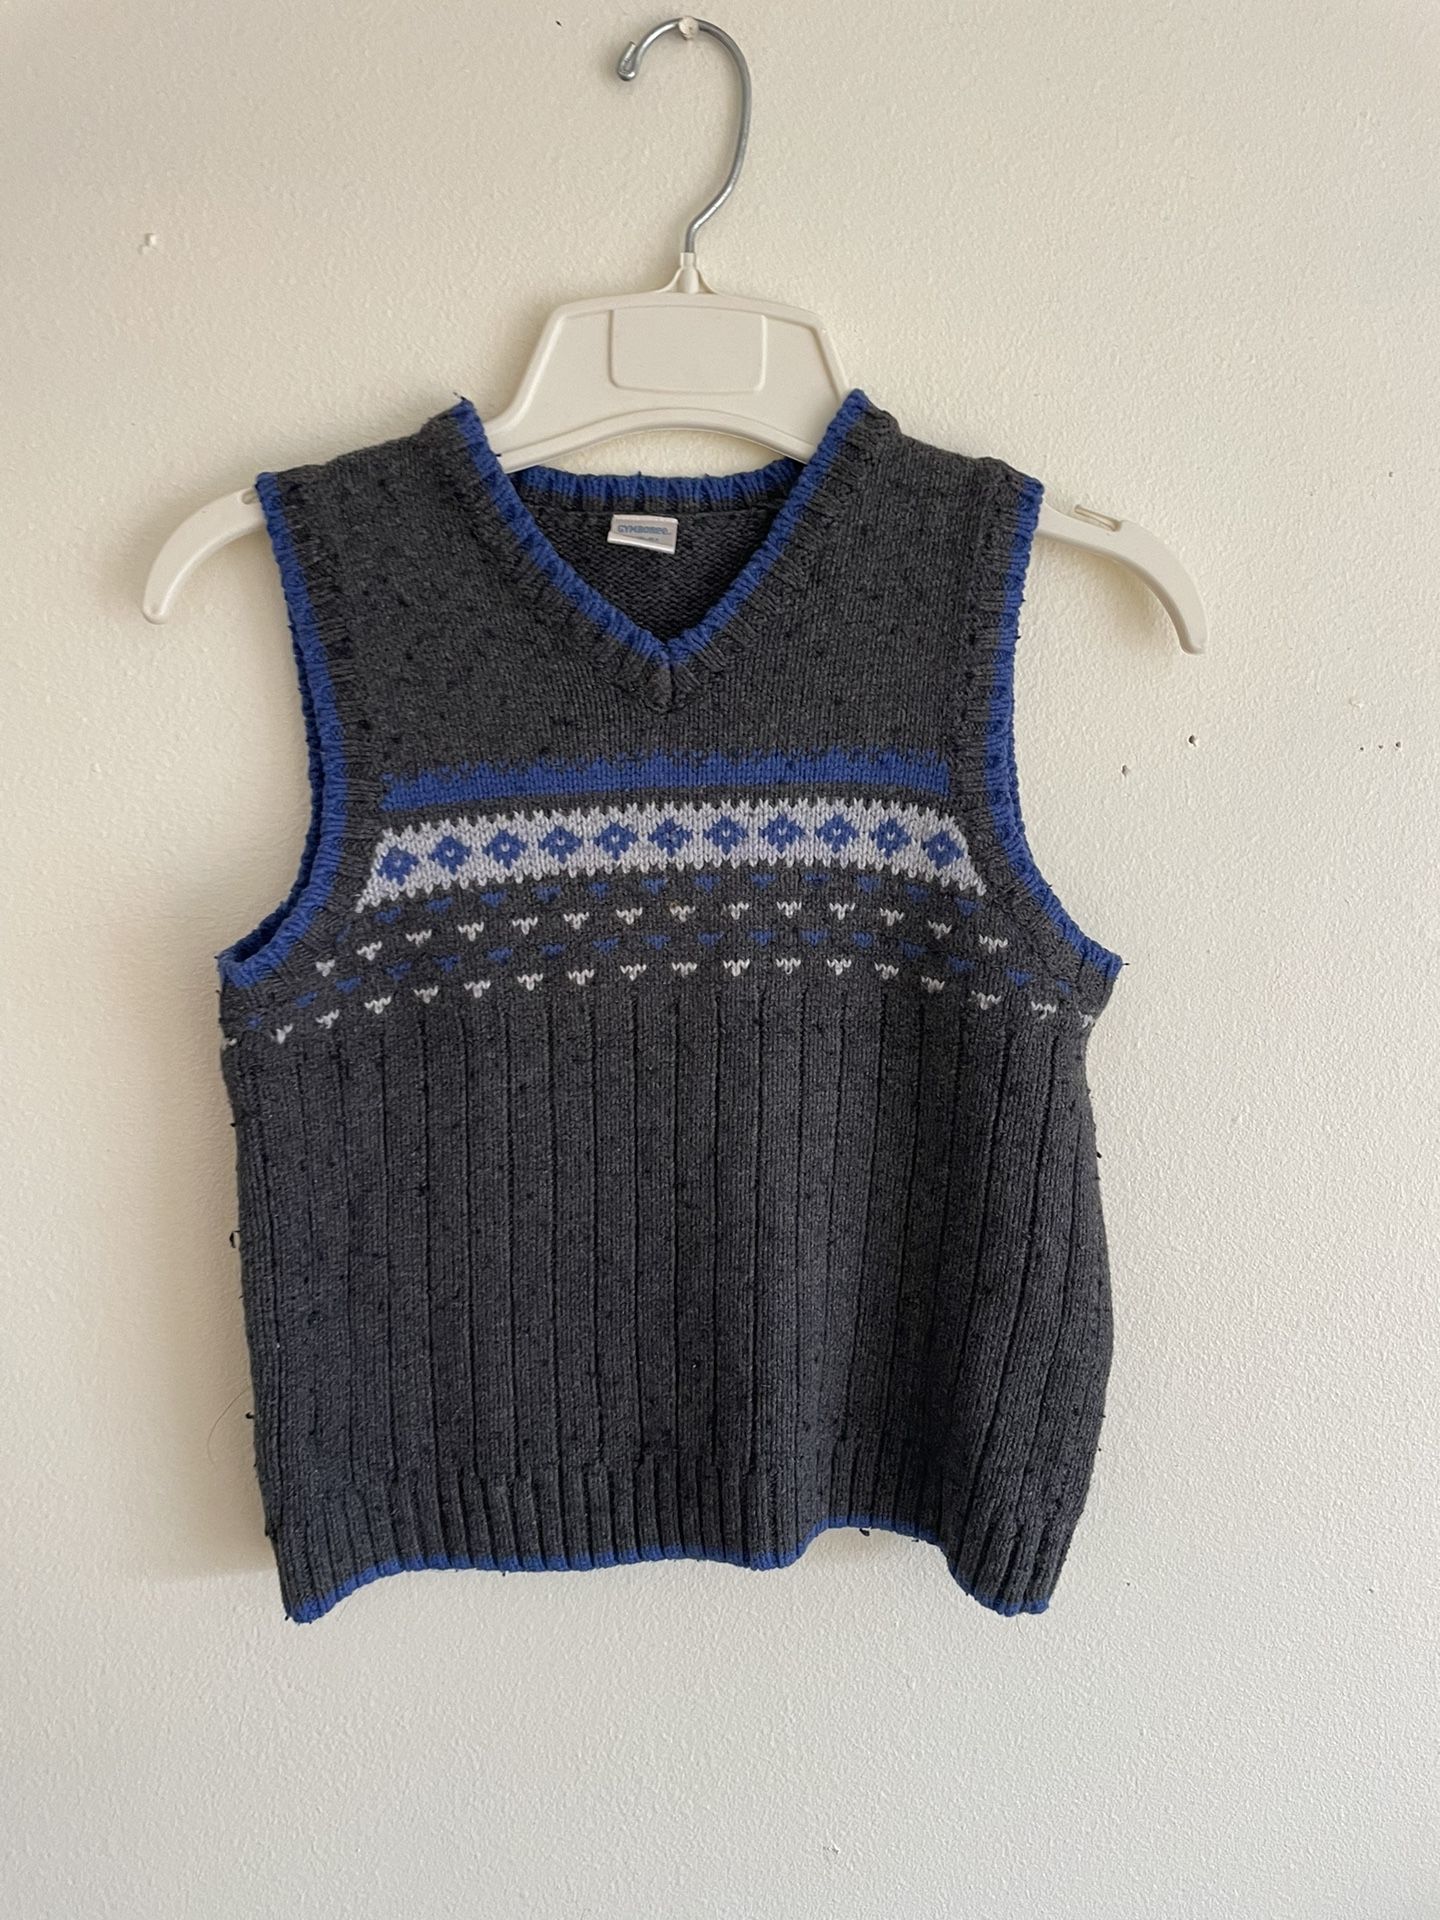 Children's sweater vest